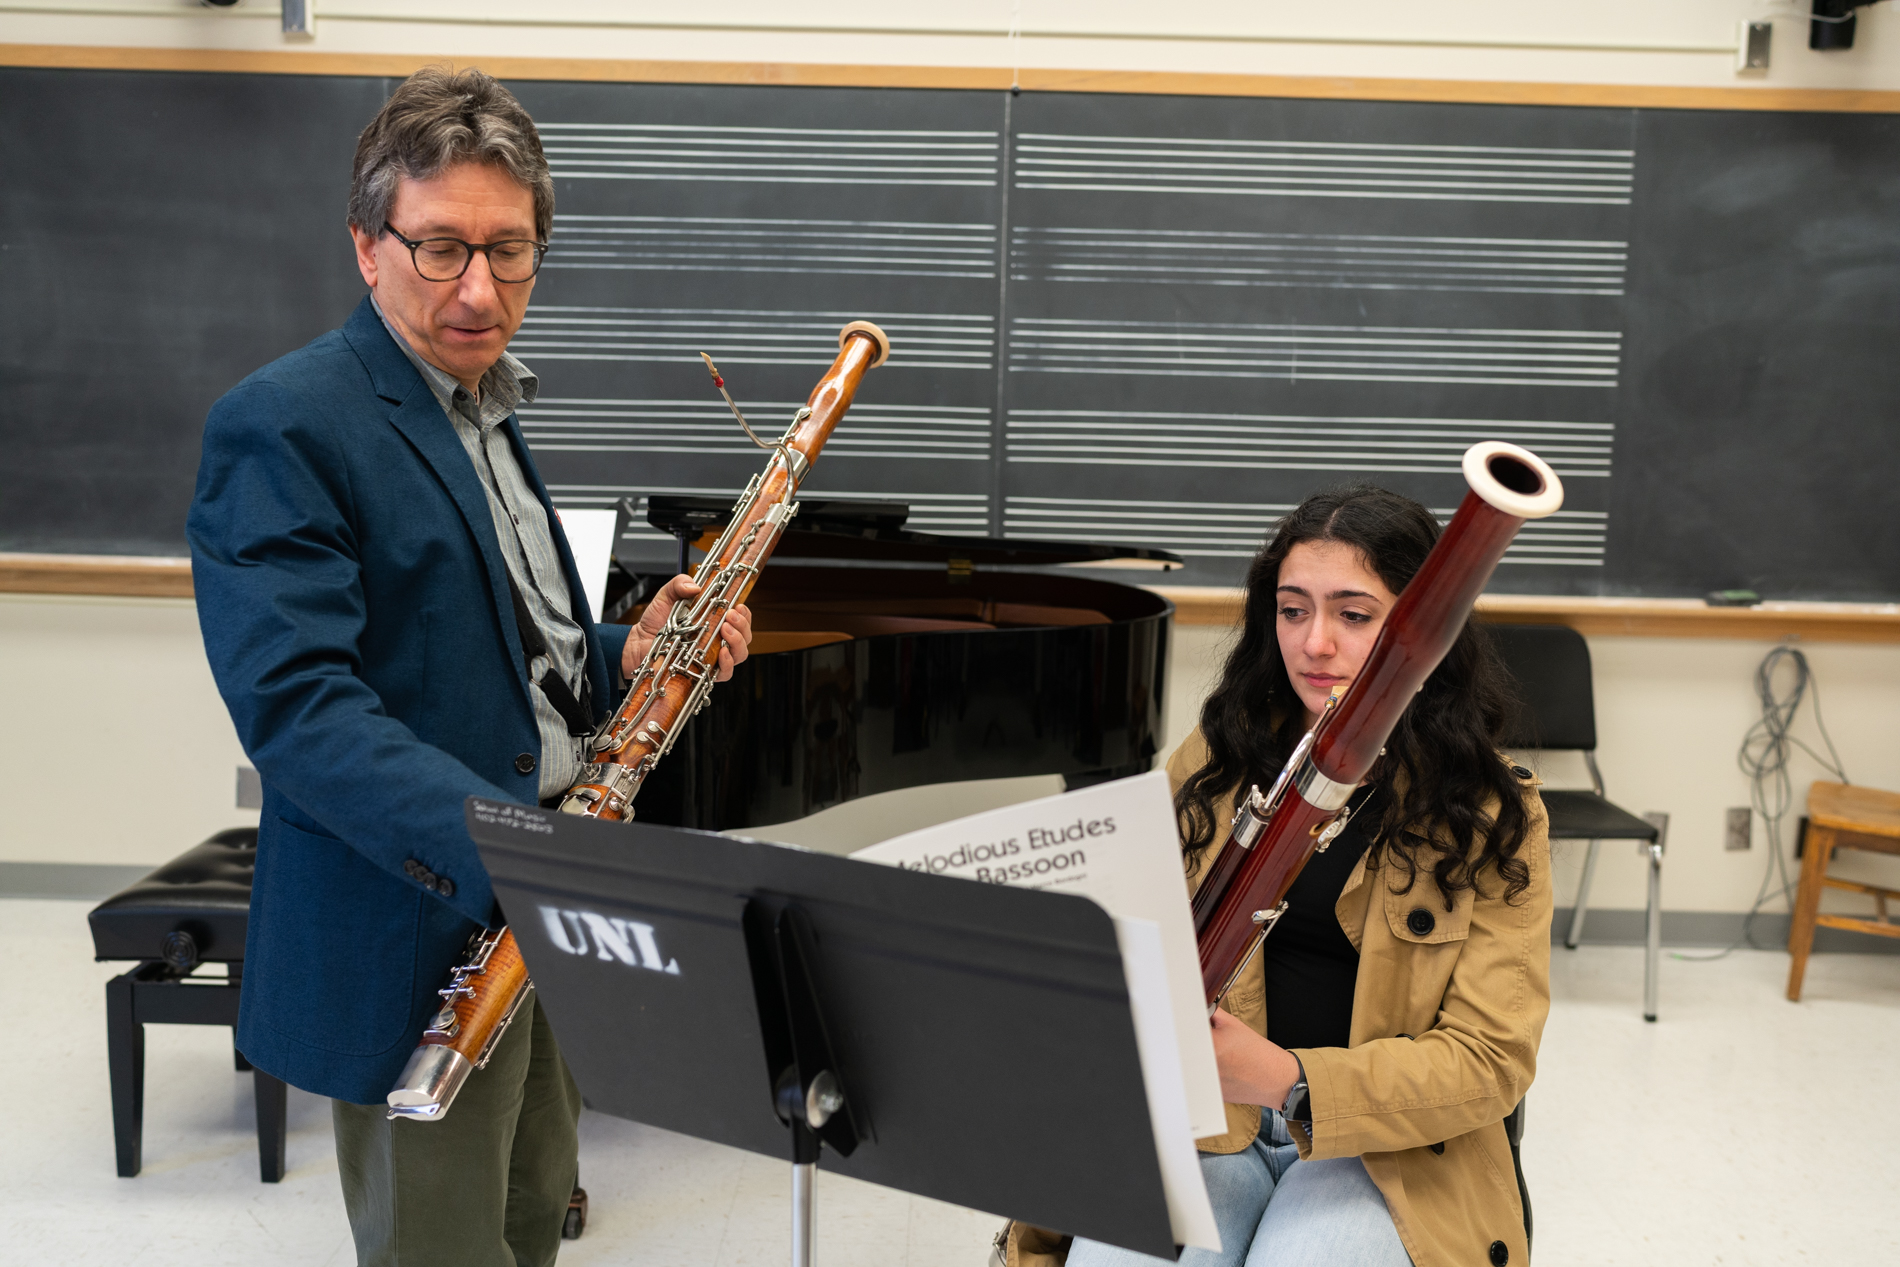 Richard Svoboda, principal bassoonist for the Boston Symphony Orchestra, gives a masterclass on April 1 to Hailey Cheek, a sophomore music student in the Glenn Korff School of Music. Photo by Eddy Aldana.